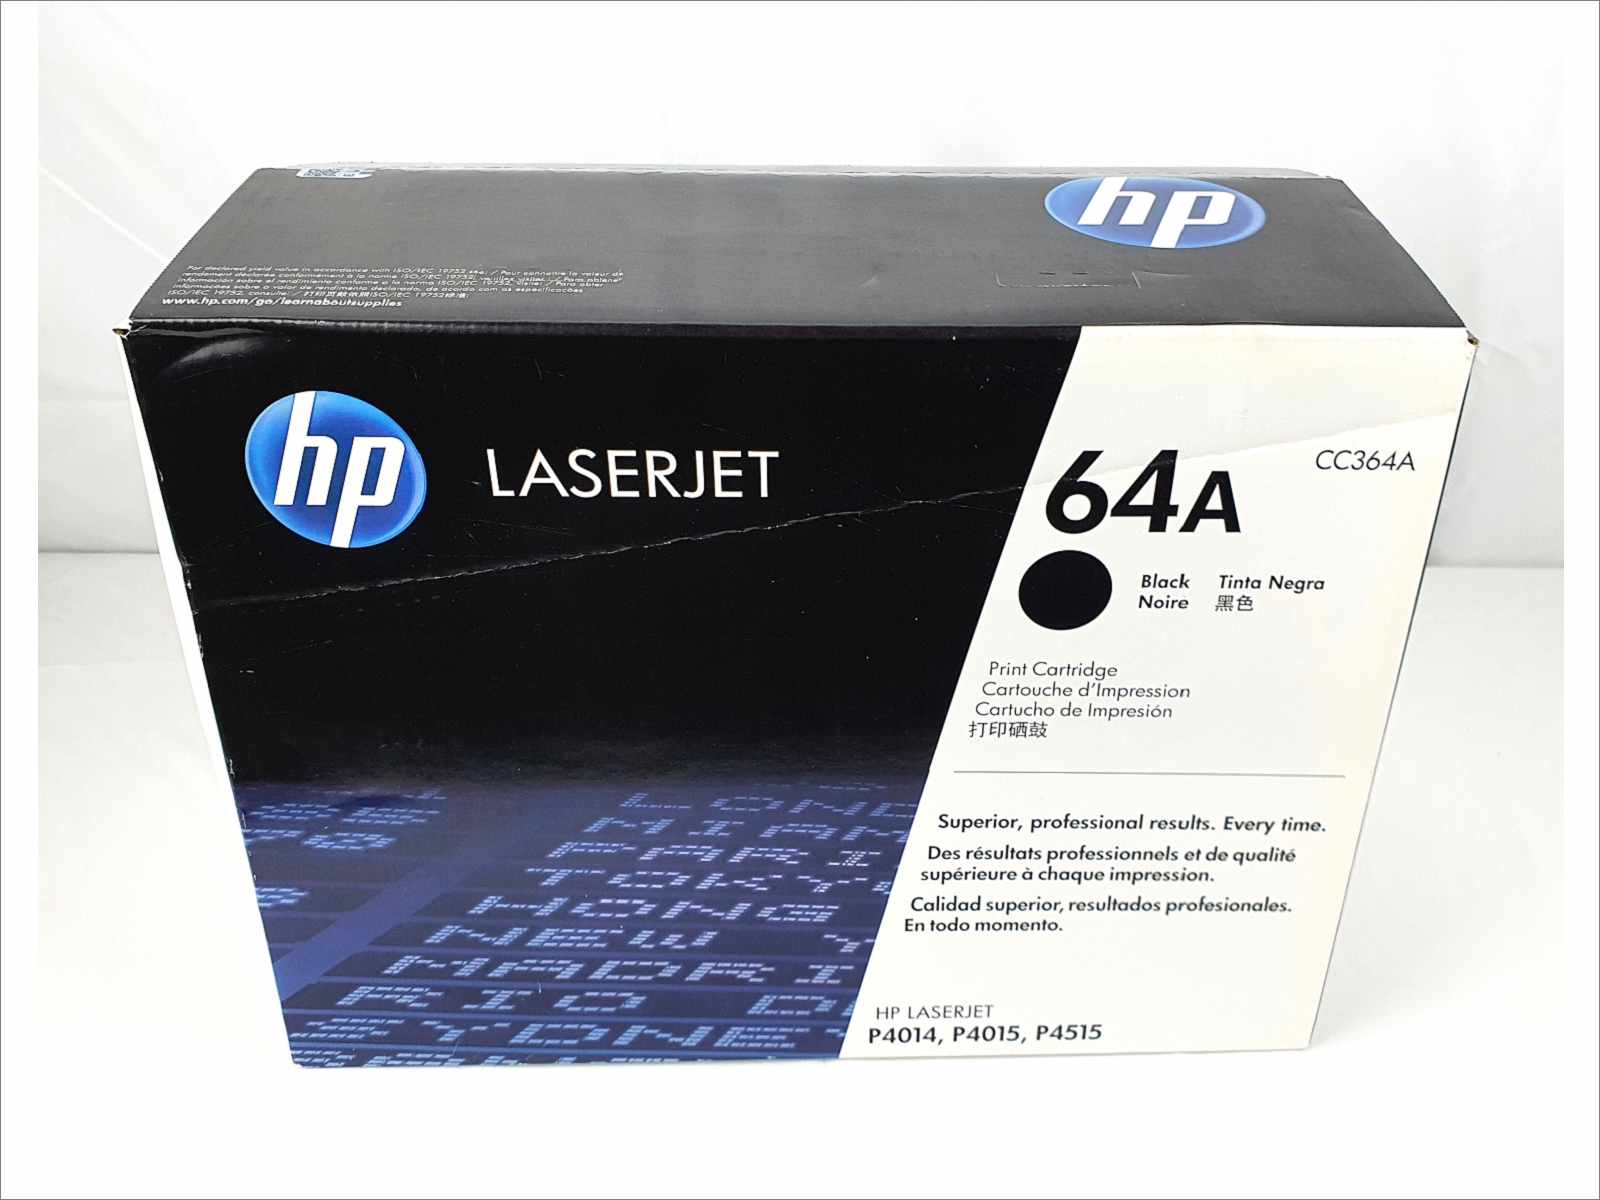 tekst lindre Kompatibel med Genuine HP 64A CC364A Black Toner Cartridge For HP Laserjet P4014 P4015  P4016 - Computer | Network | Telecom | Lab & medical Equipment